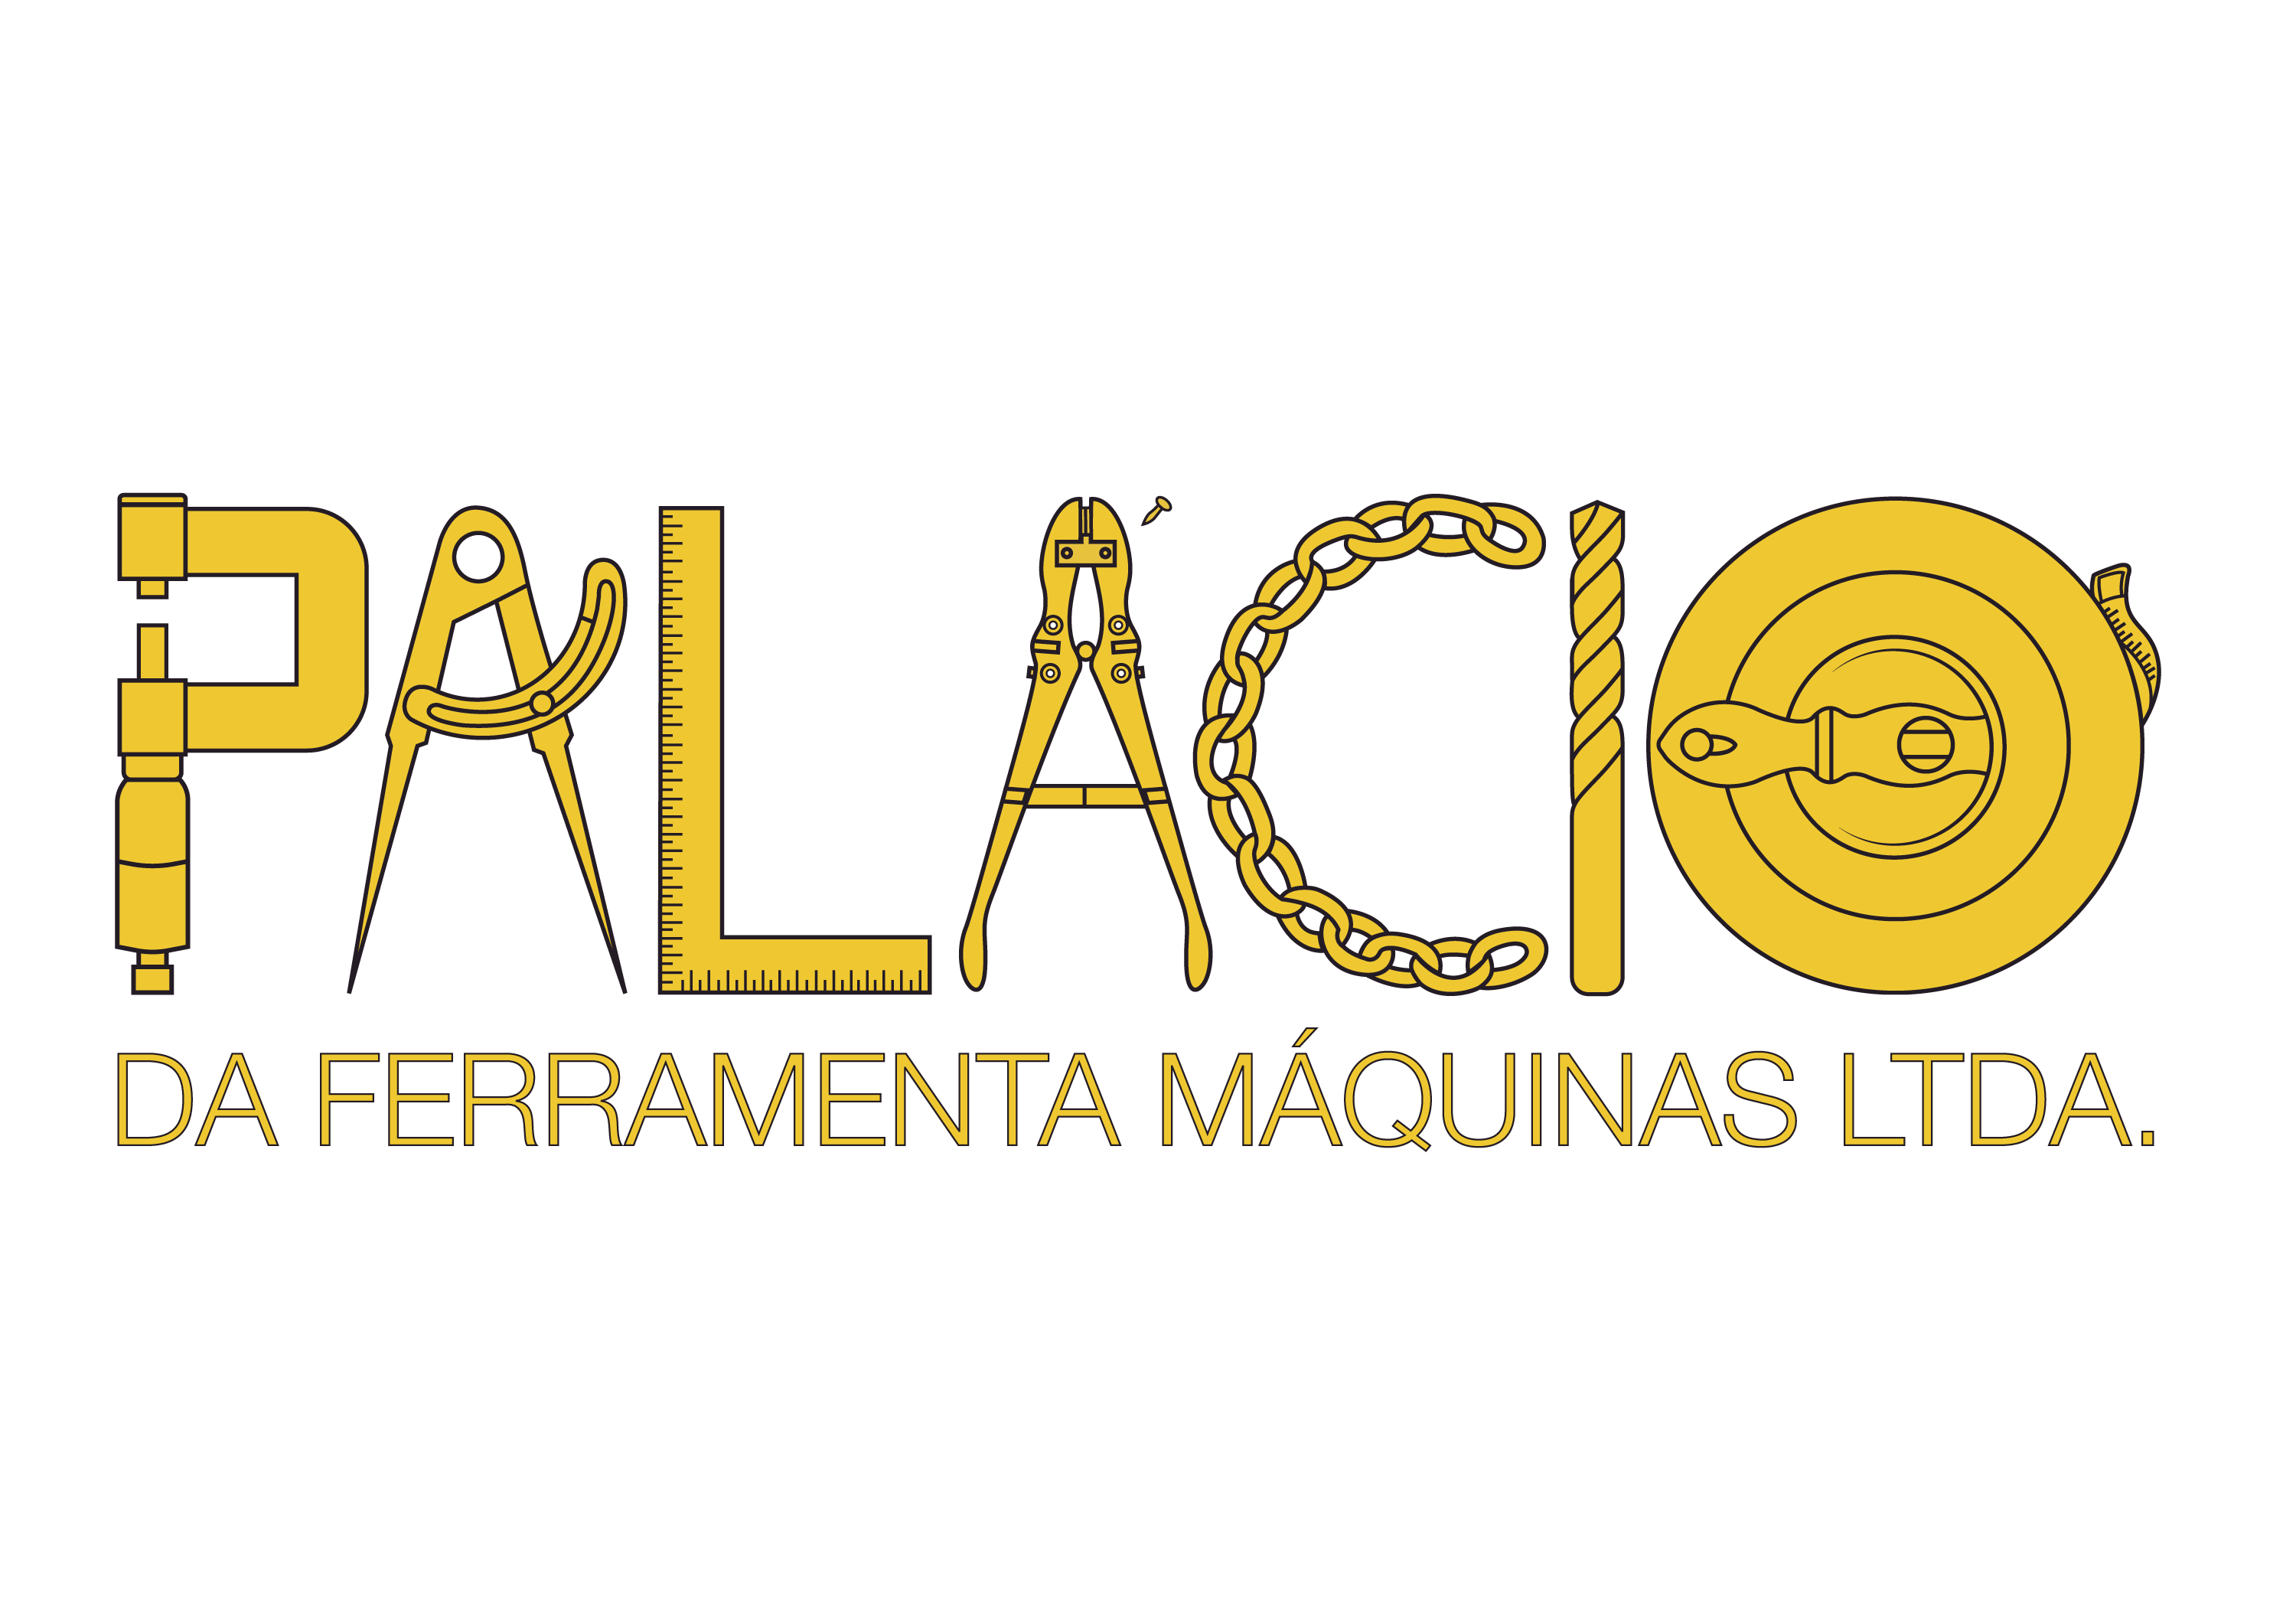 Palacio Logo